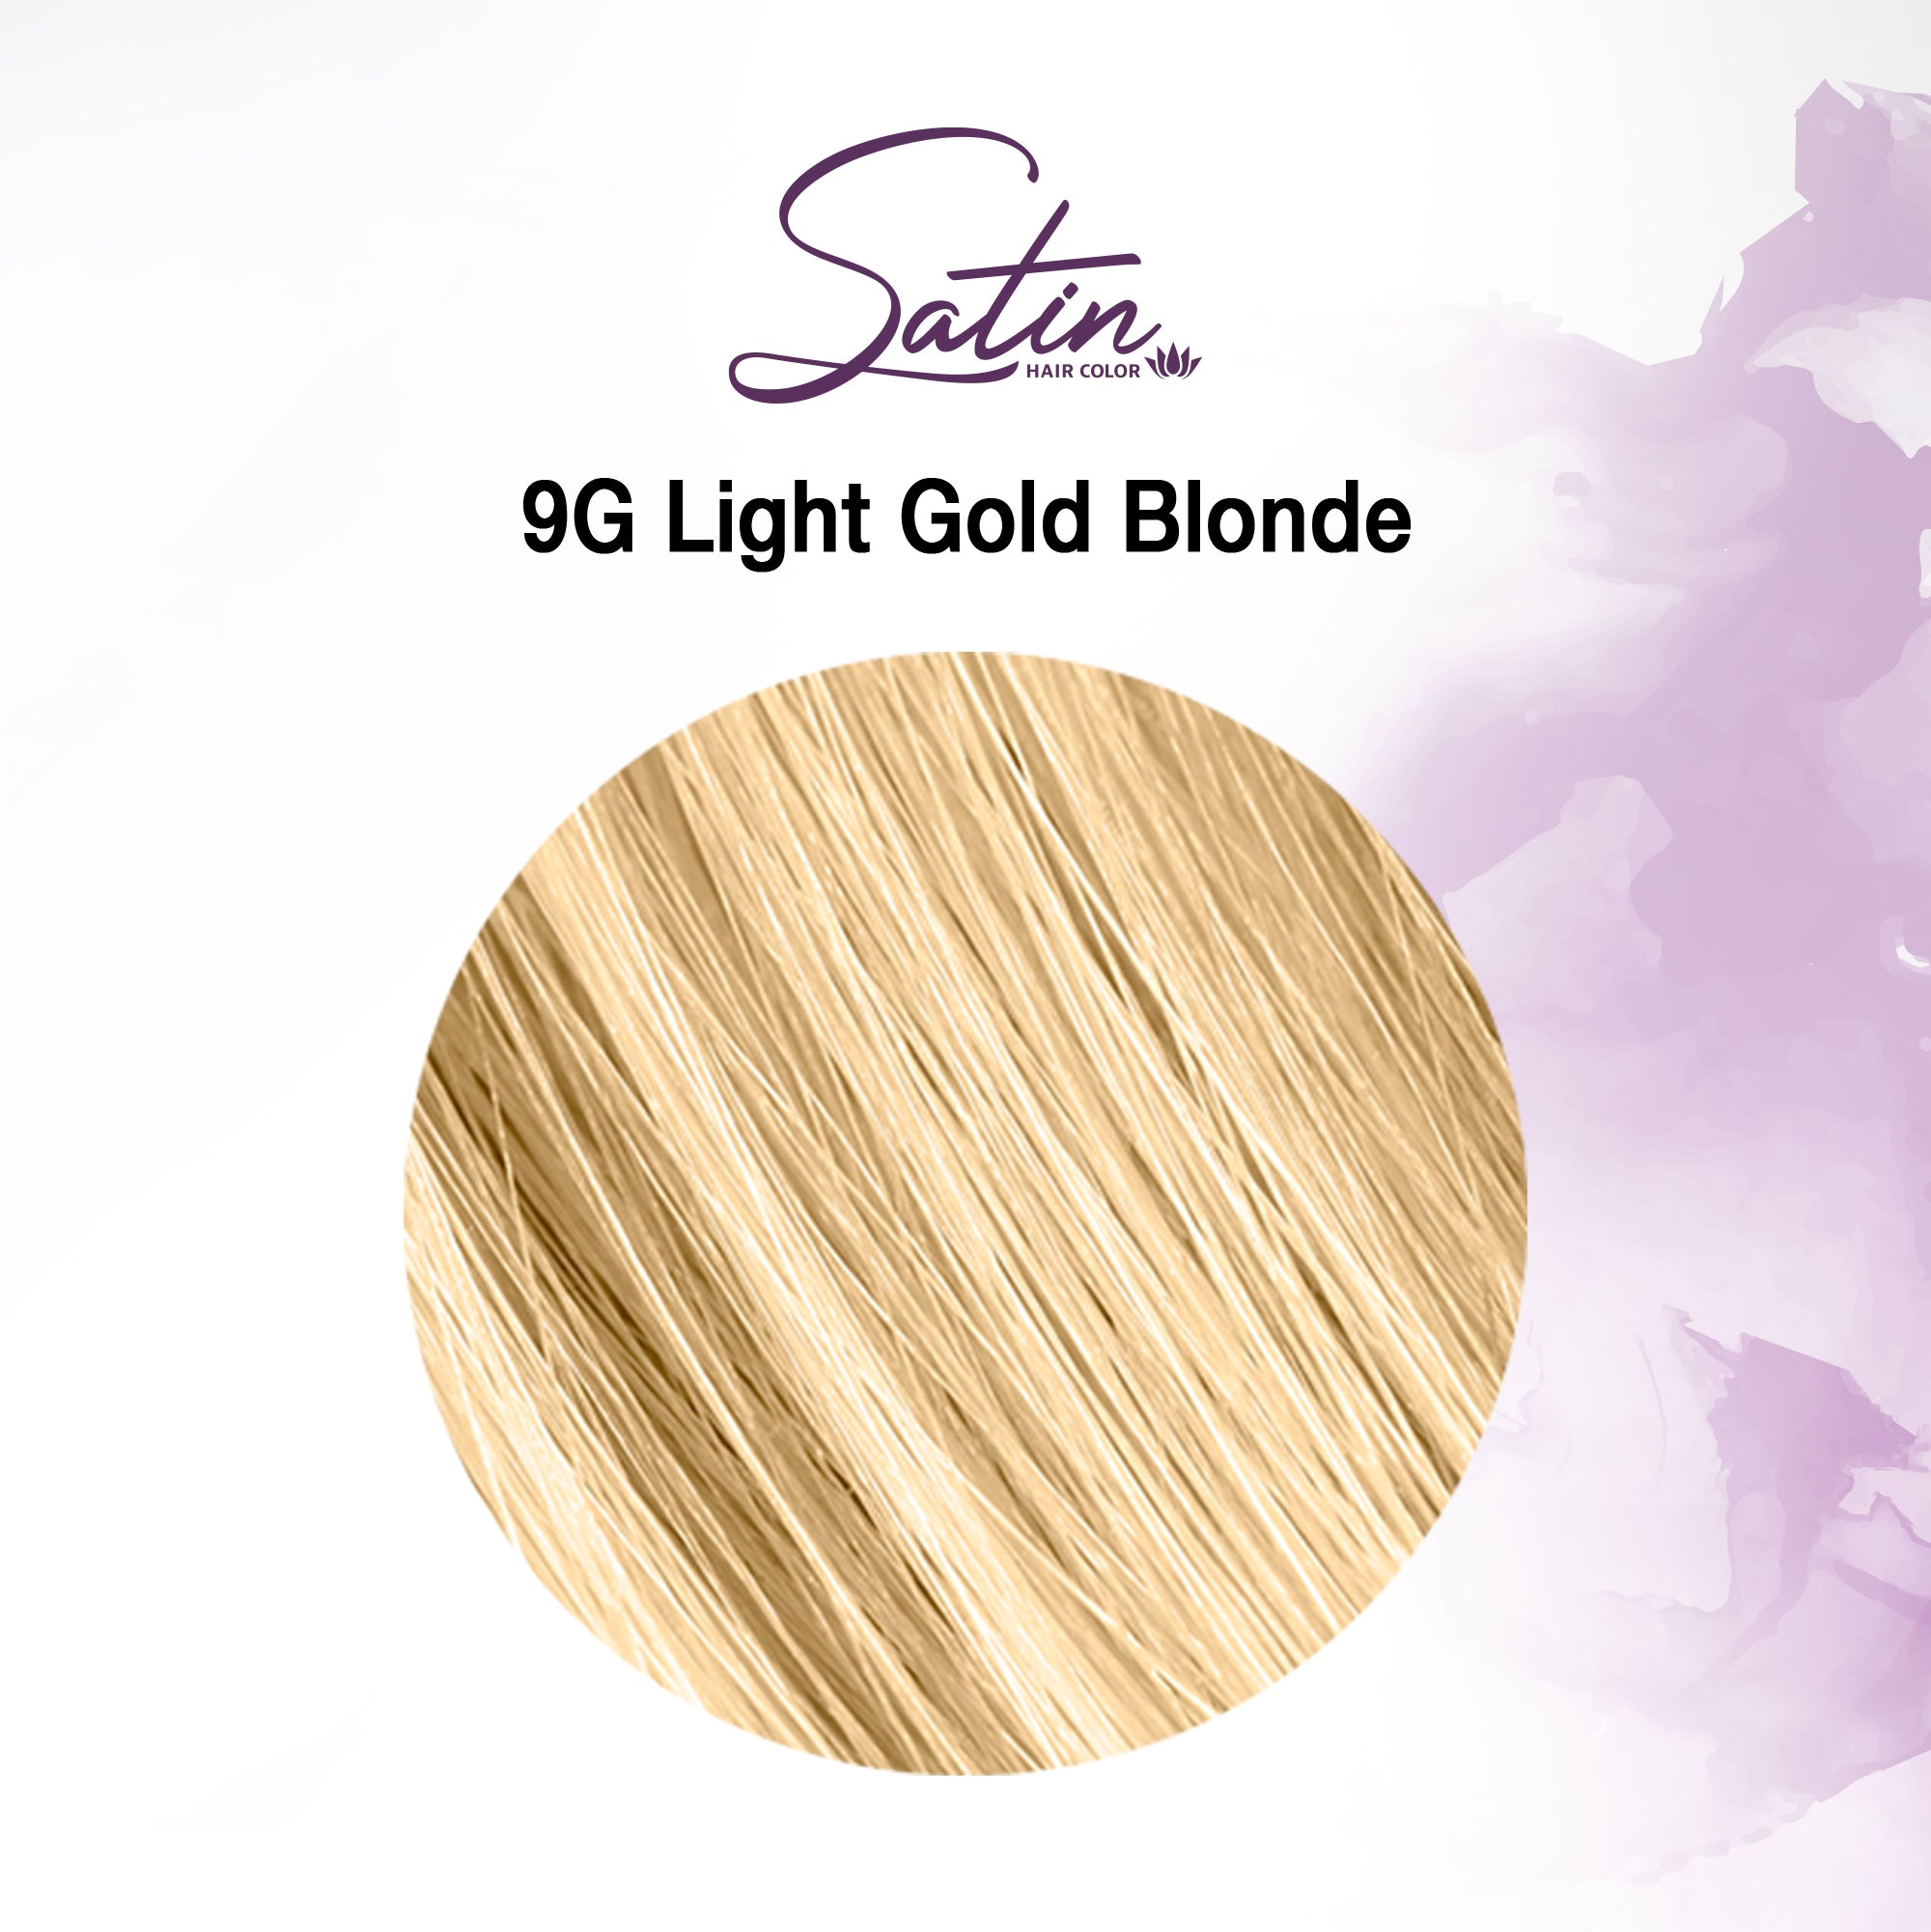 Satin Hair Color Very Light Golden Blonde (9G) | TotallyHairCare